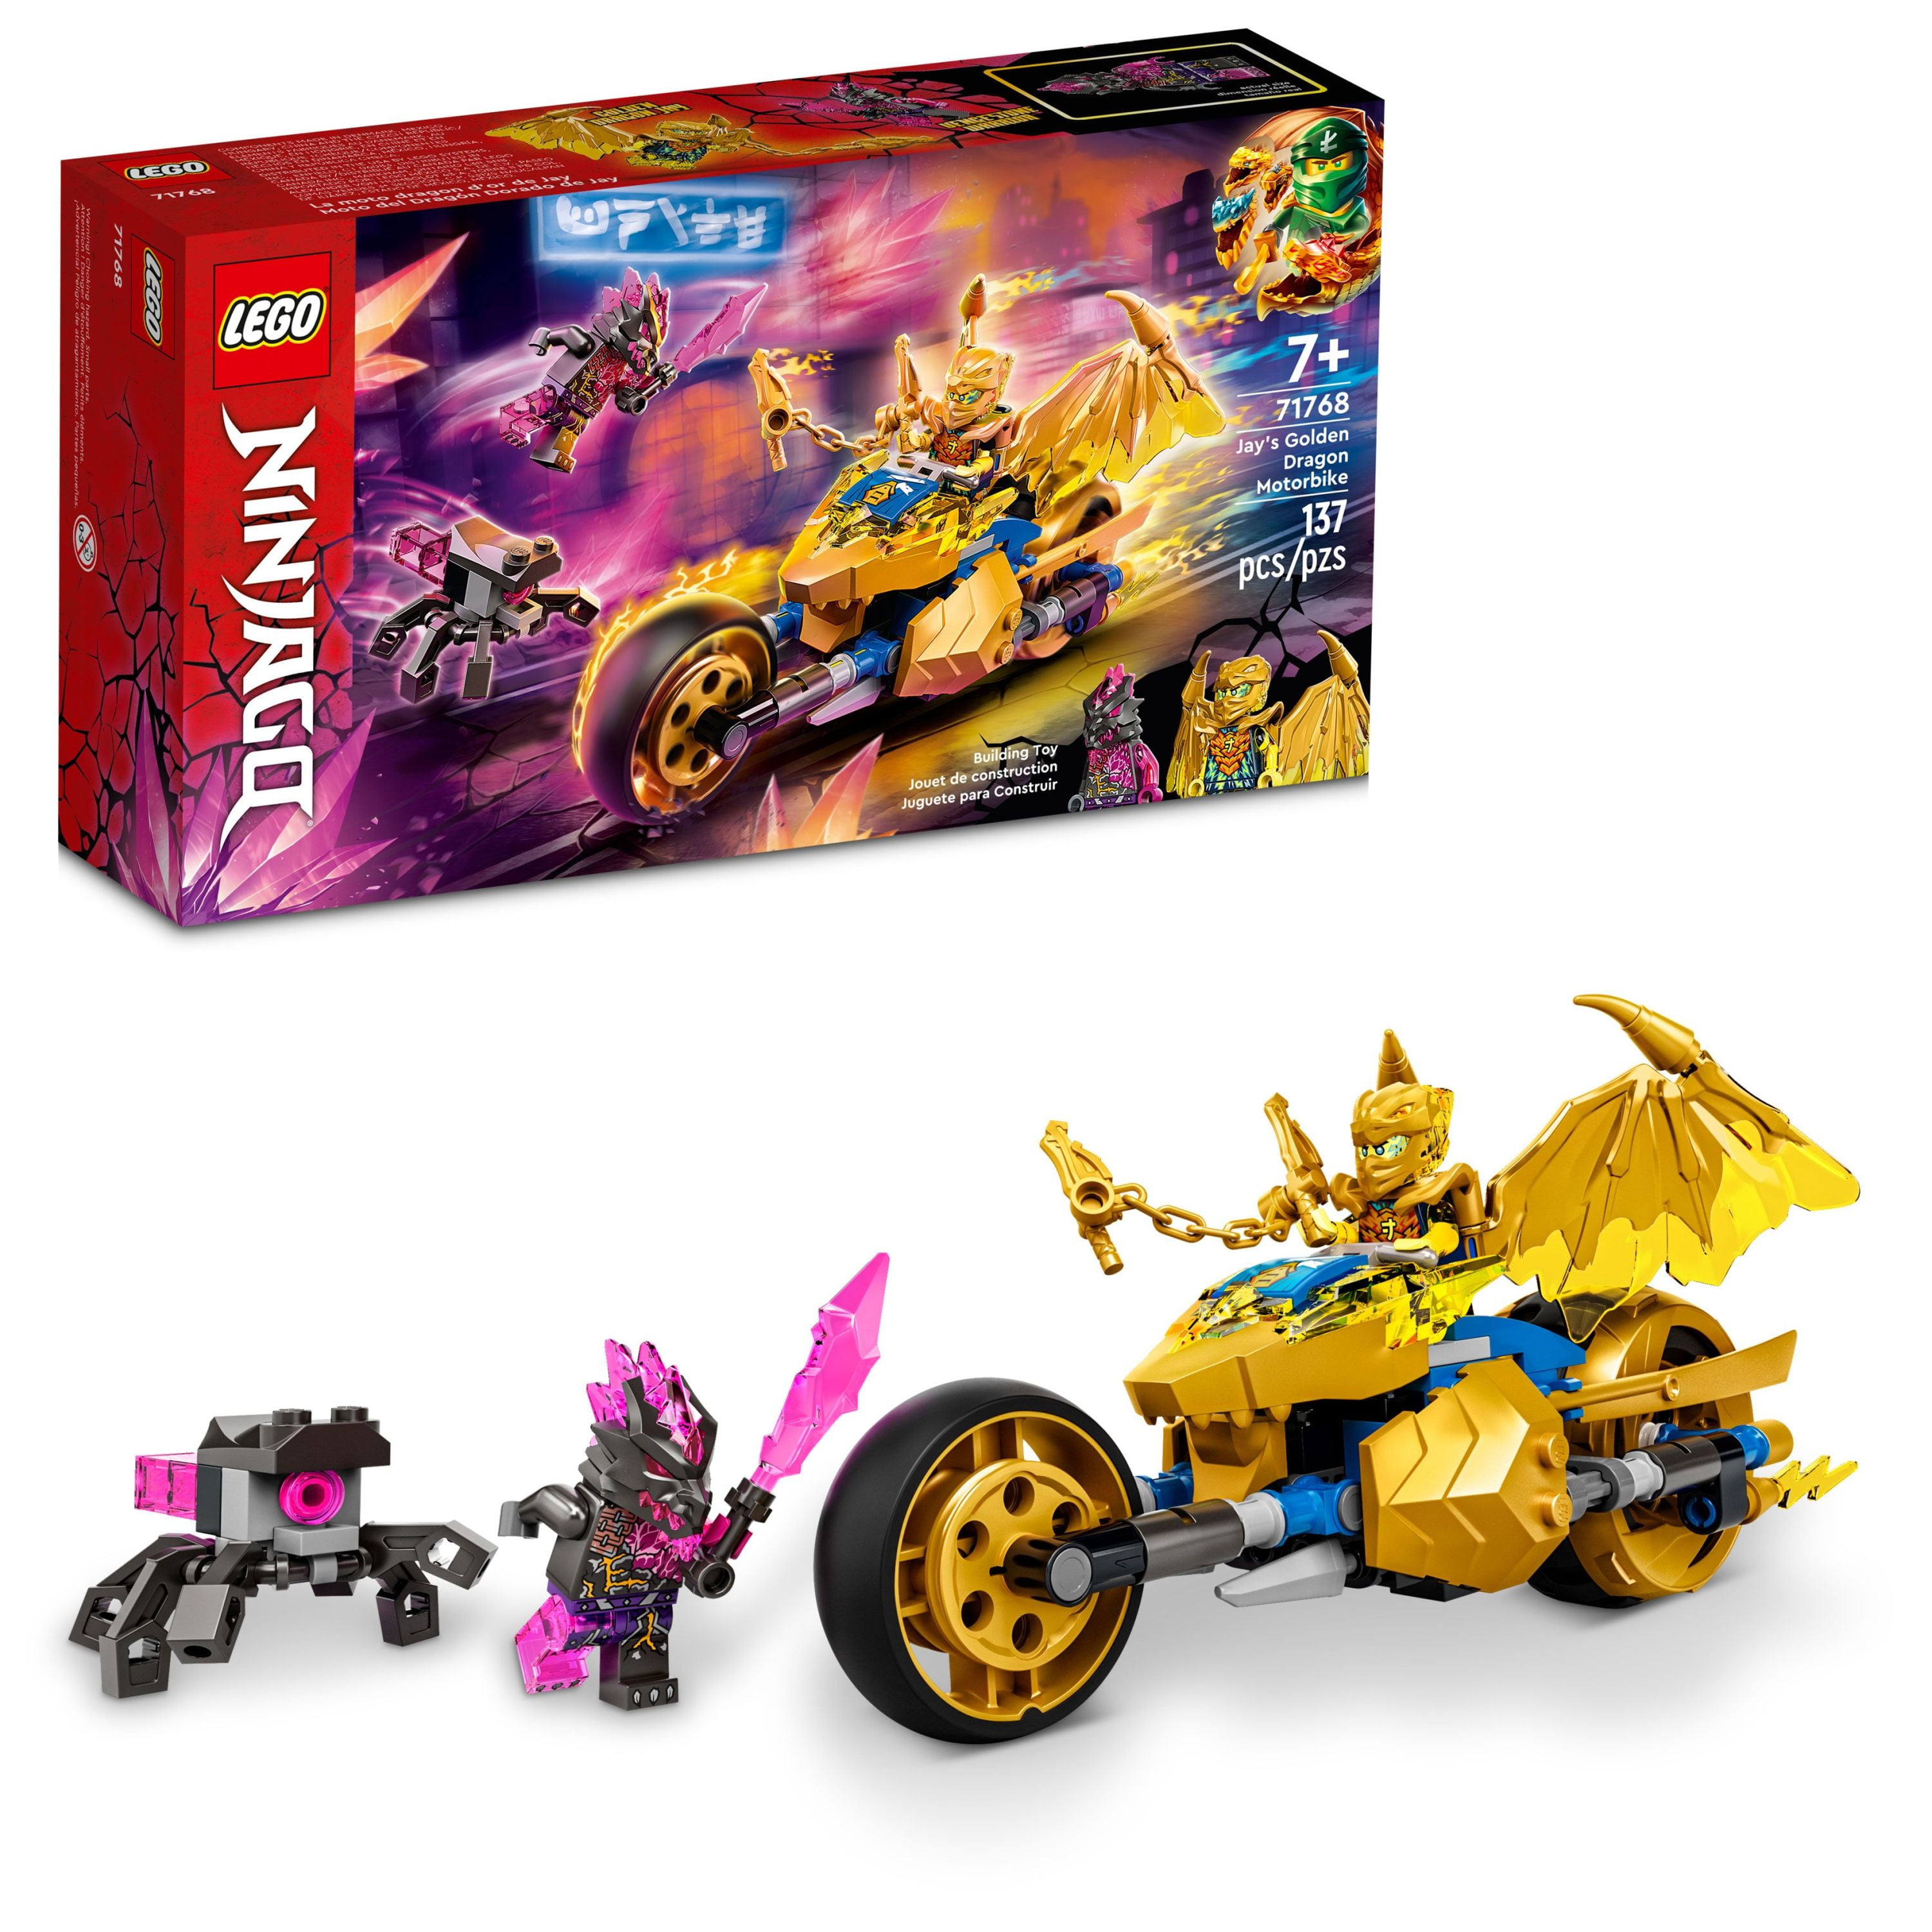 LEGO NINJAGO Jays Golden Dragon Motorbike 71768 Building Set (137 Pieces)